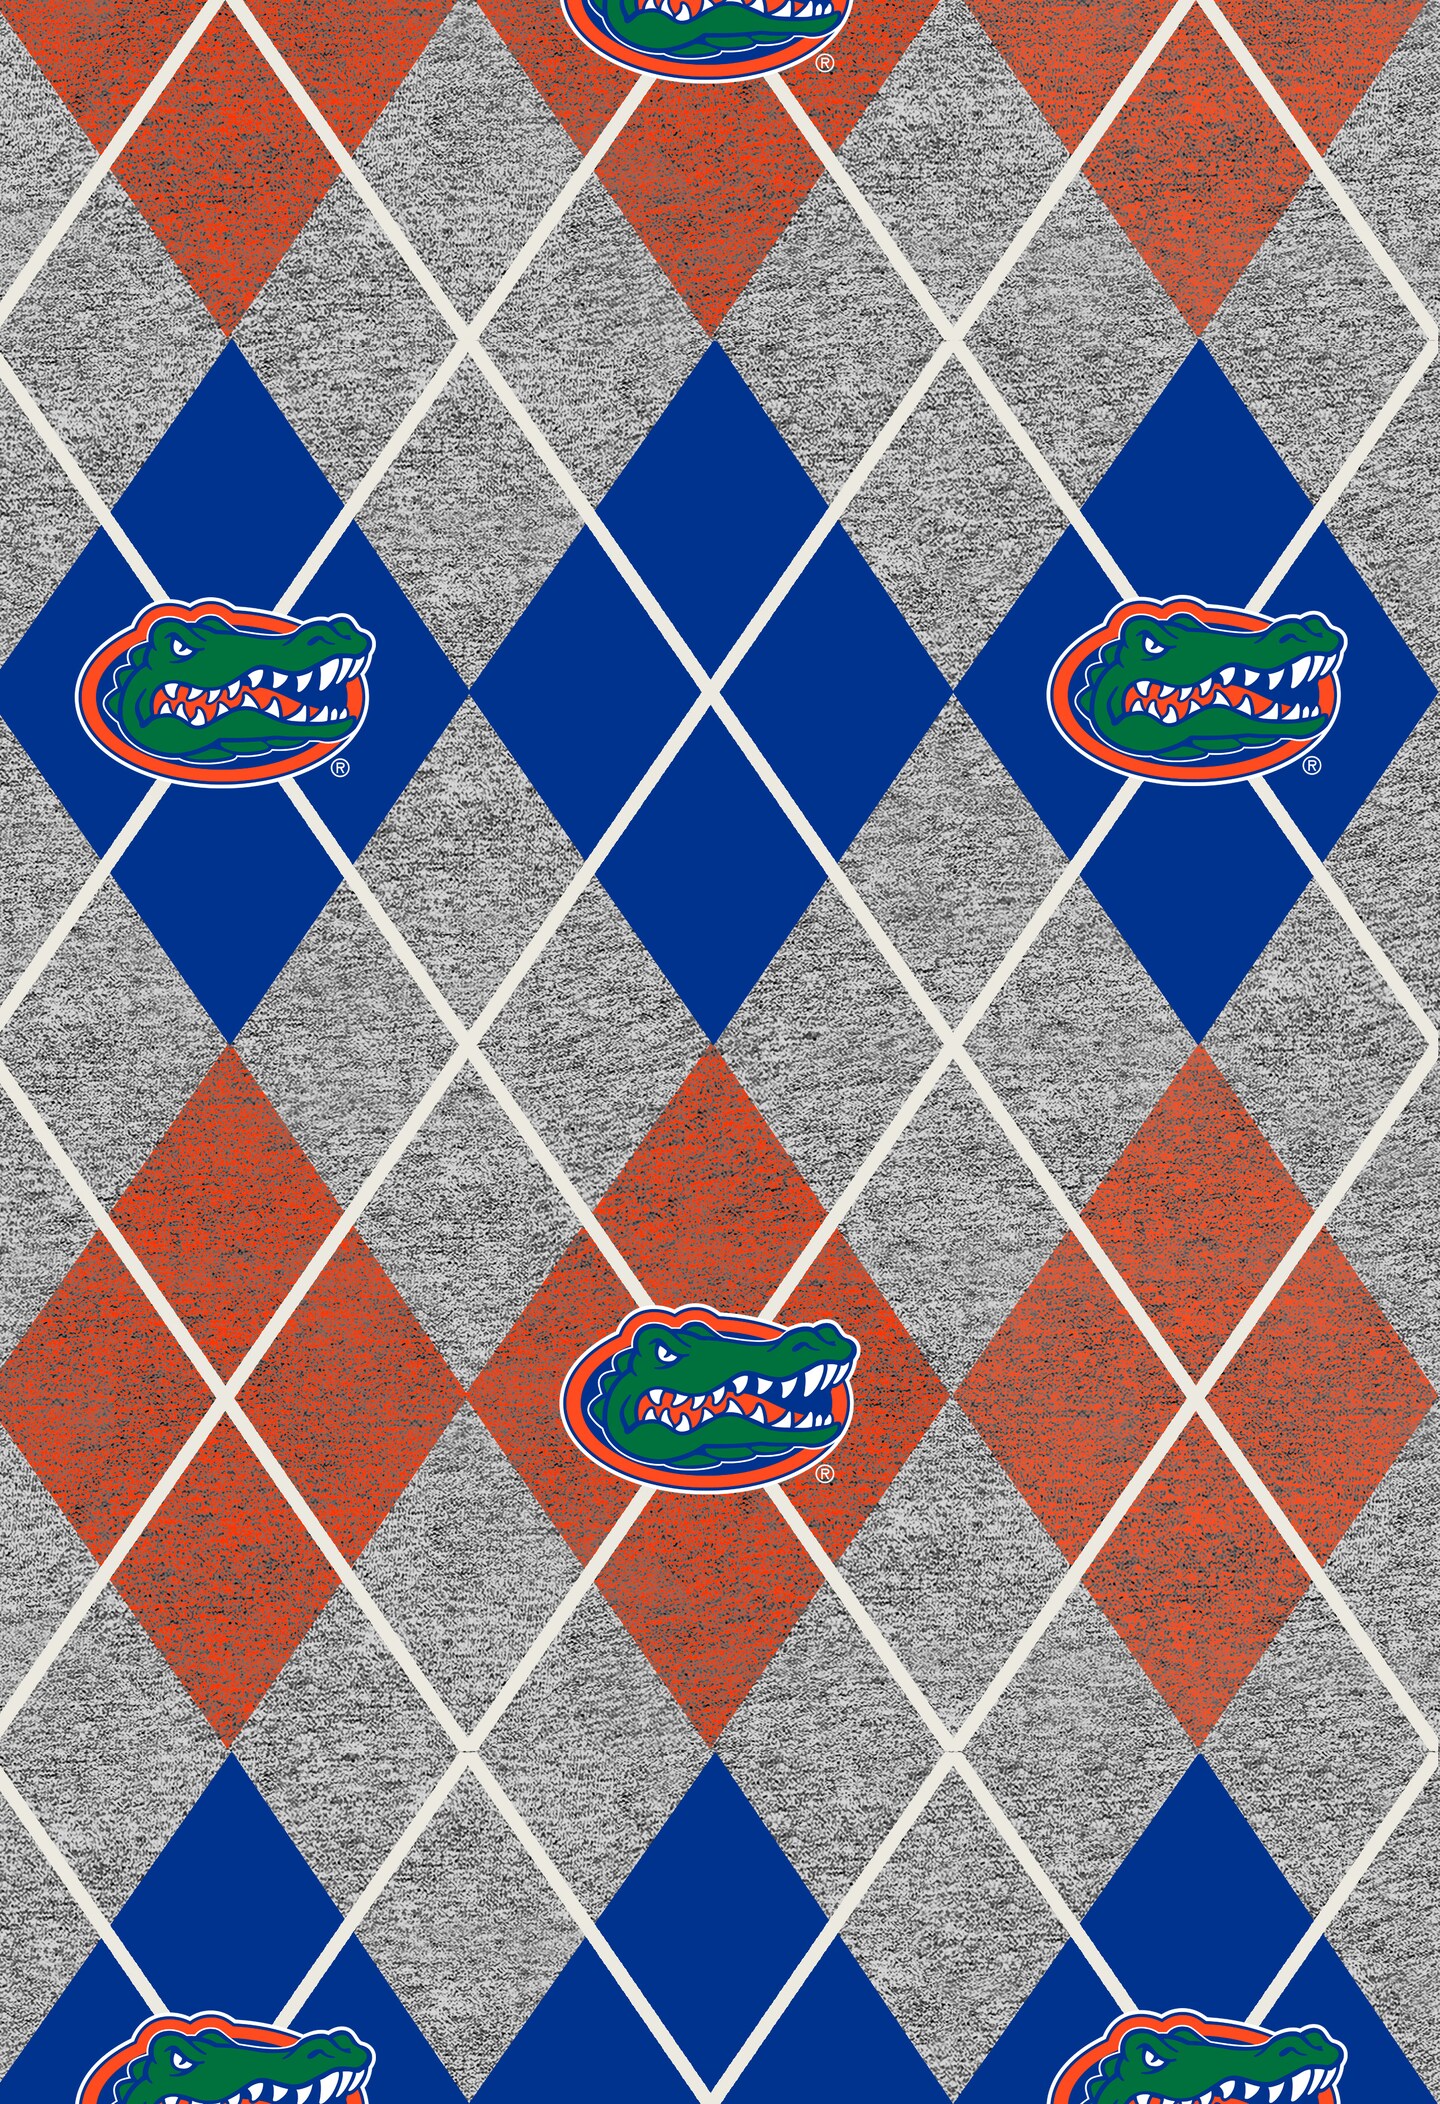 Sykel Enterprises-University of Florida Fleece Fabric-Florida Gators Heather Argyle Fleece Blanket Fabric-Sold by the yard